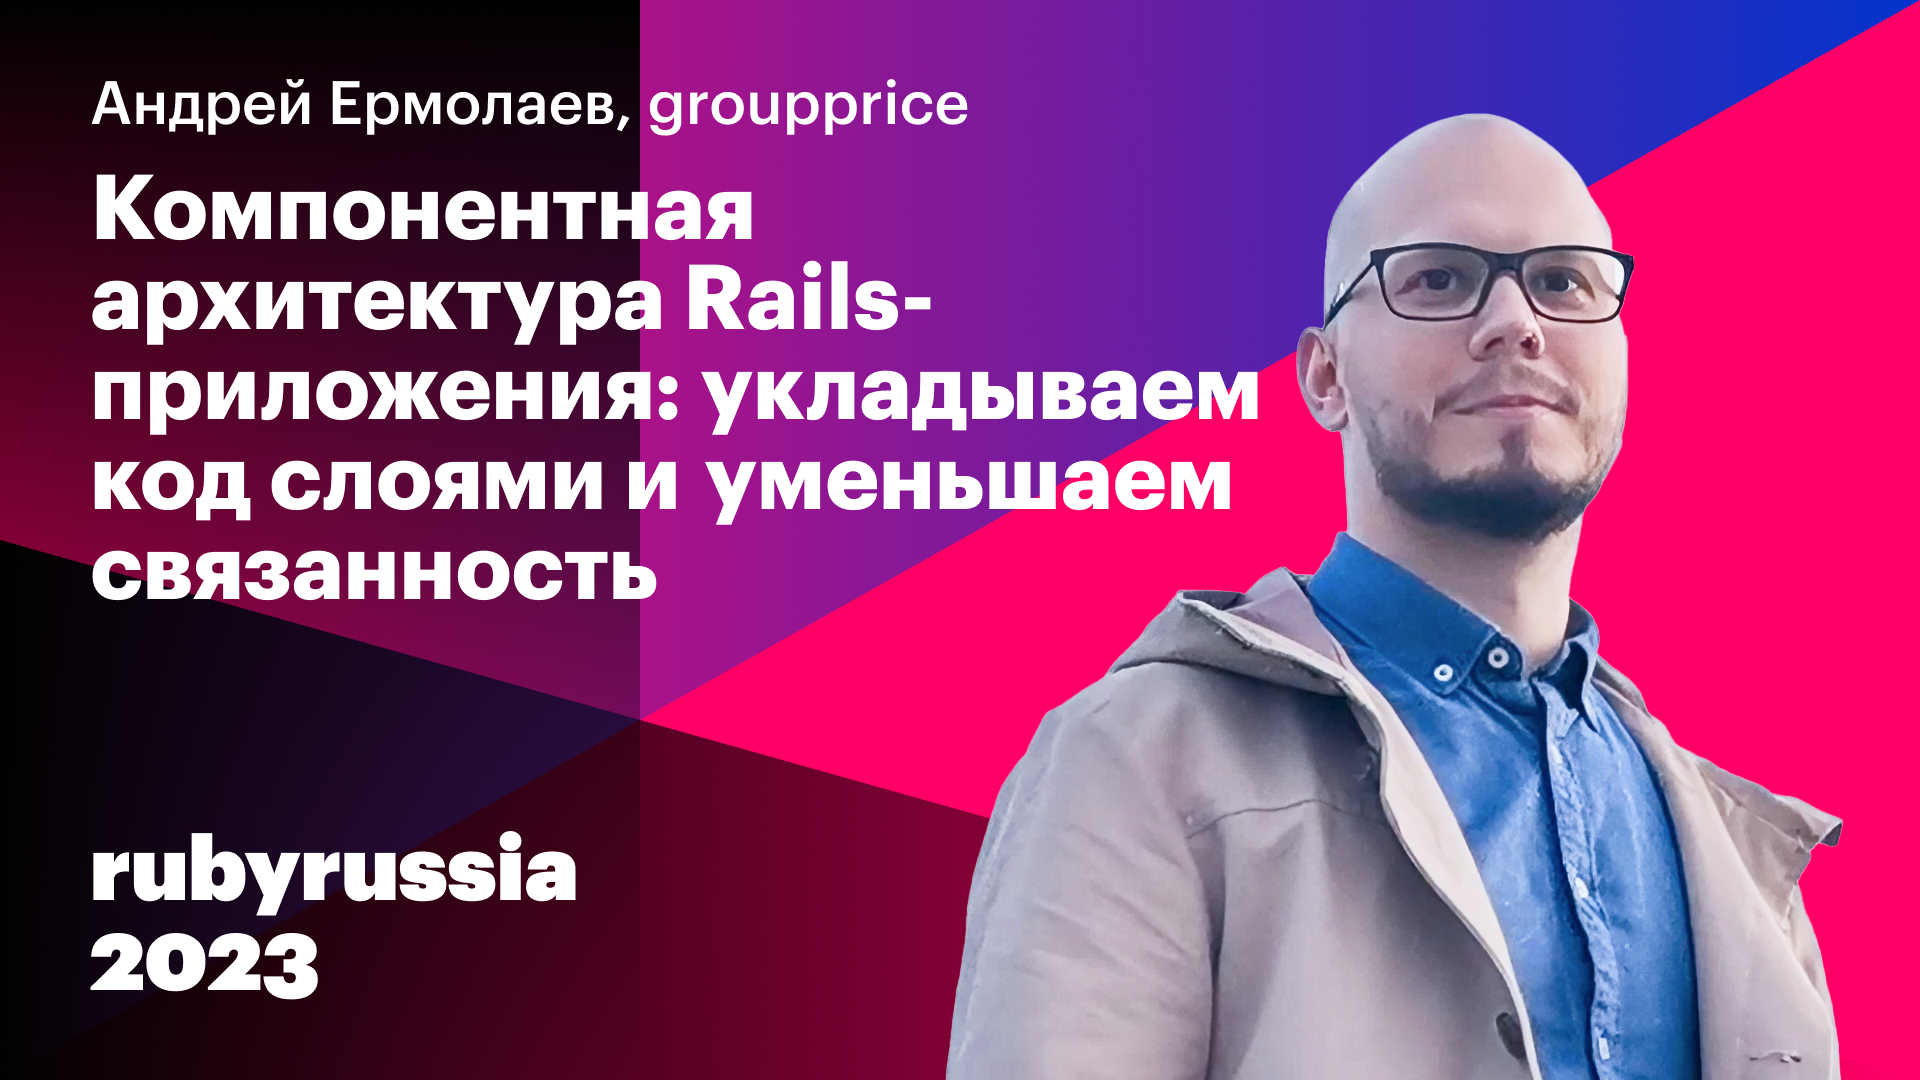 Компонентная архитектура Rails приложения — Андрей Ермолаев, groupprice.ru. Ruby Russia 2023